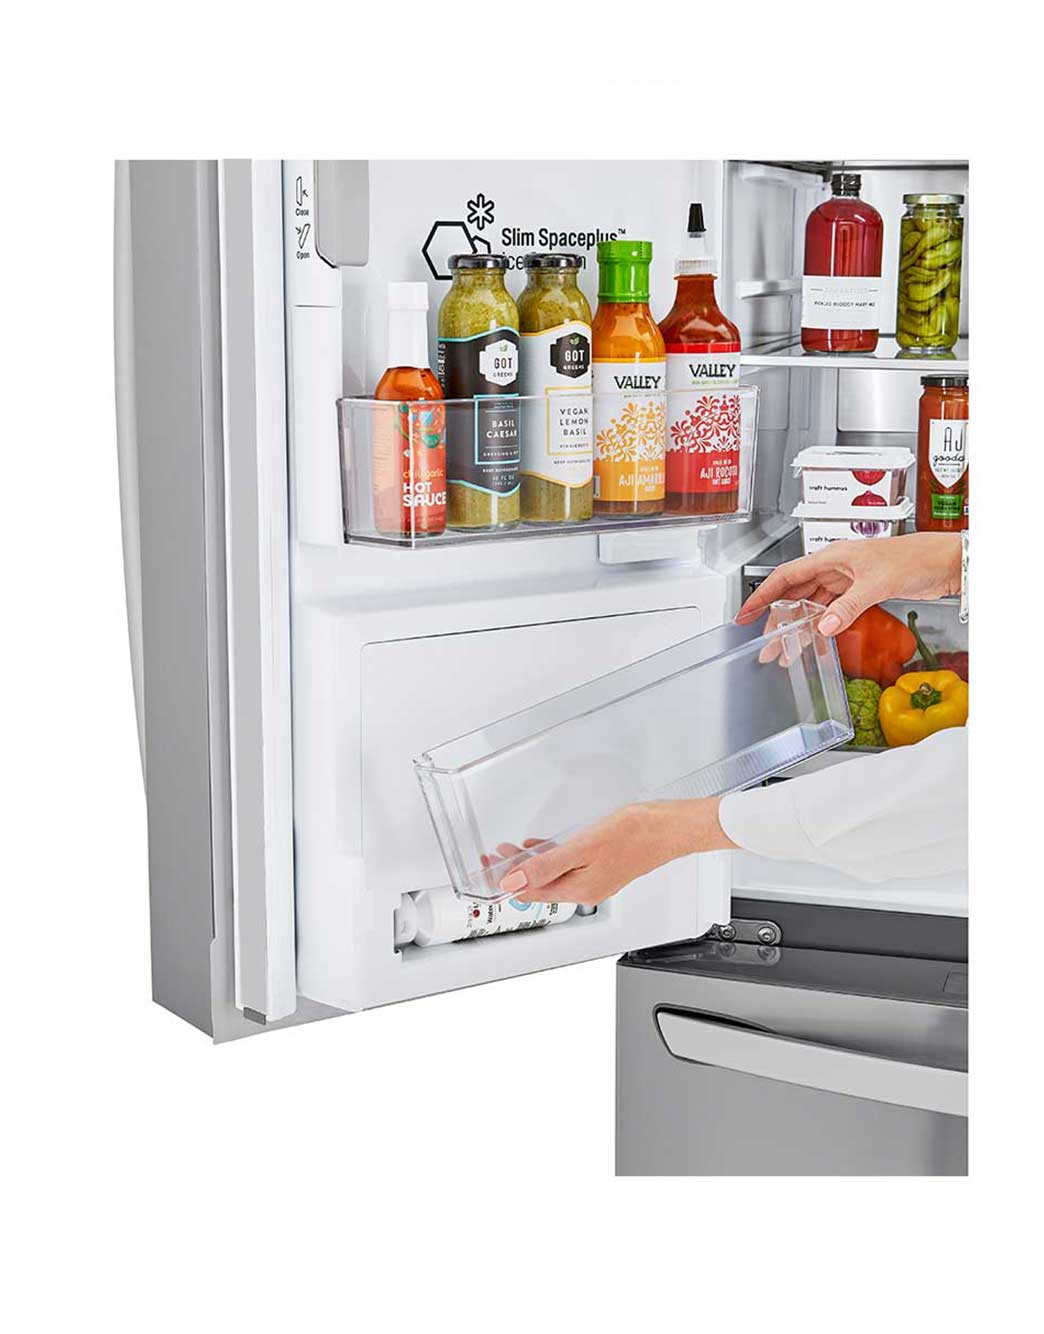 LG LLMXS3006S: 30 cu. ft. Smart French Door Refrigerator | LG USA